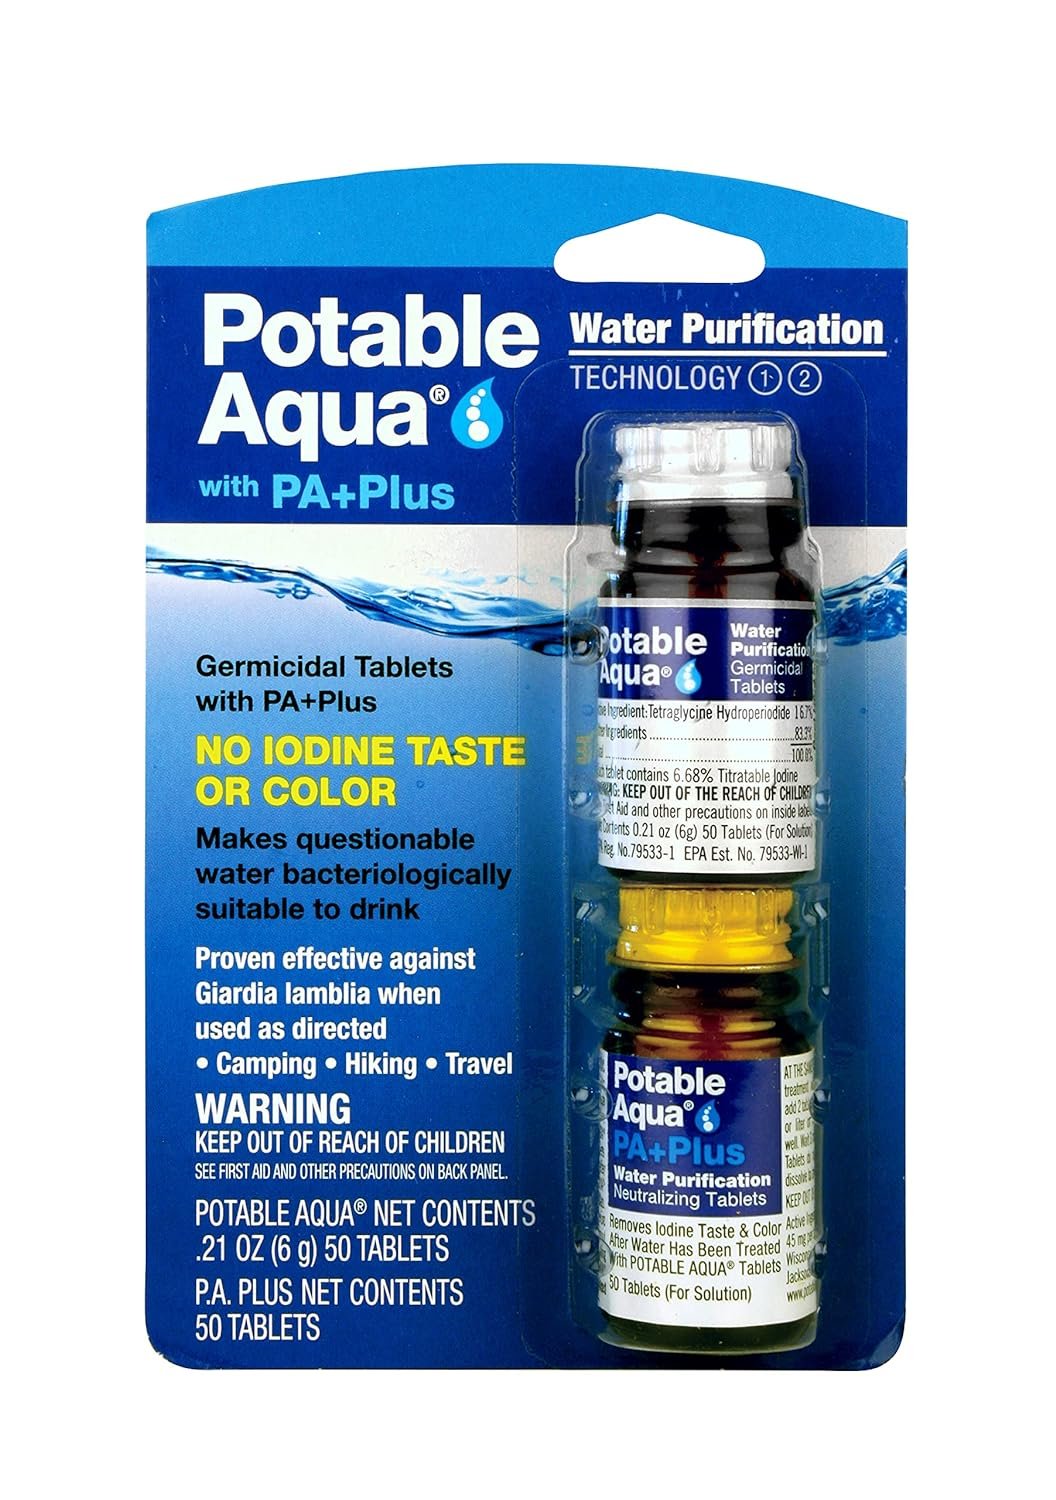 Potable Aqua Water Purification Tablets Review